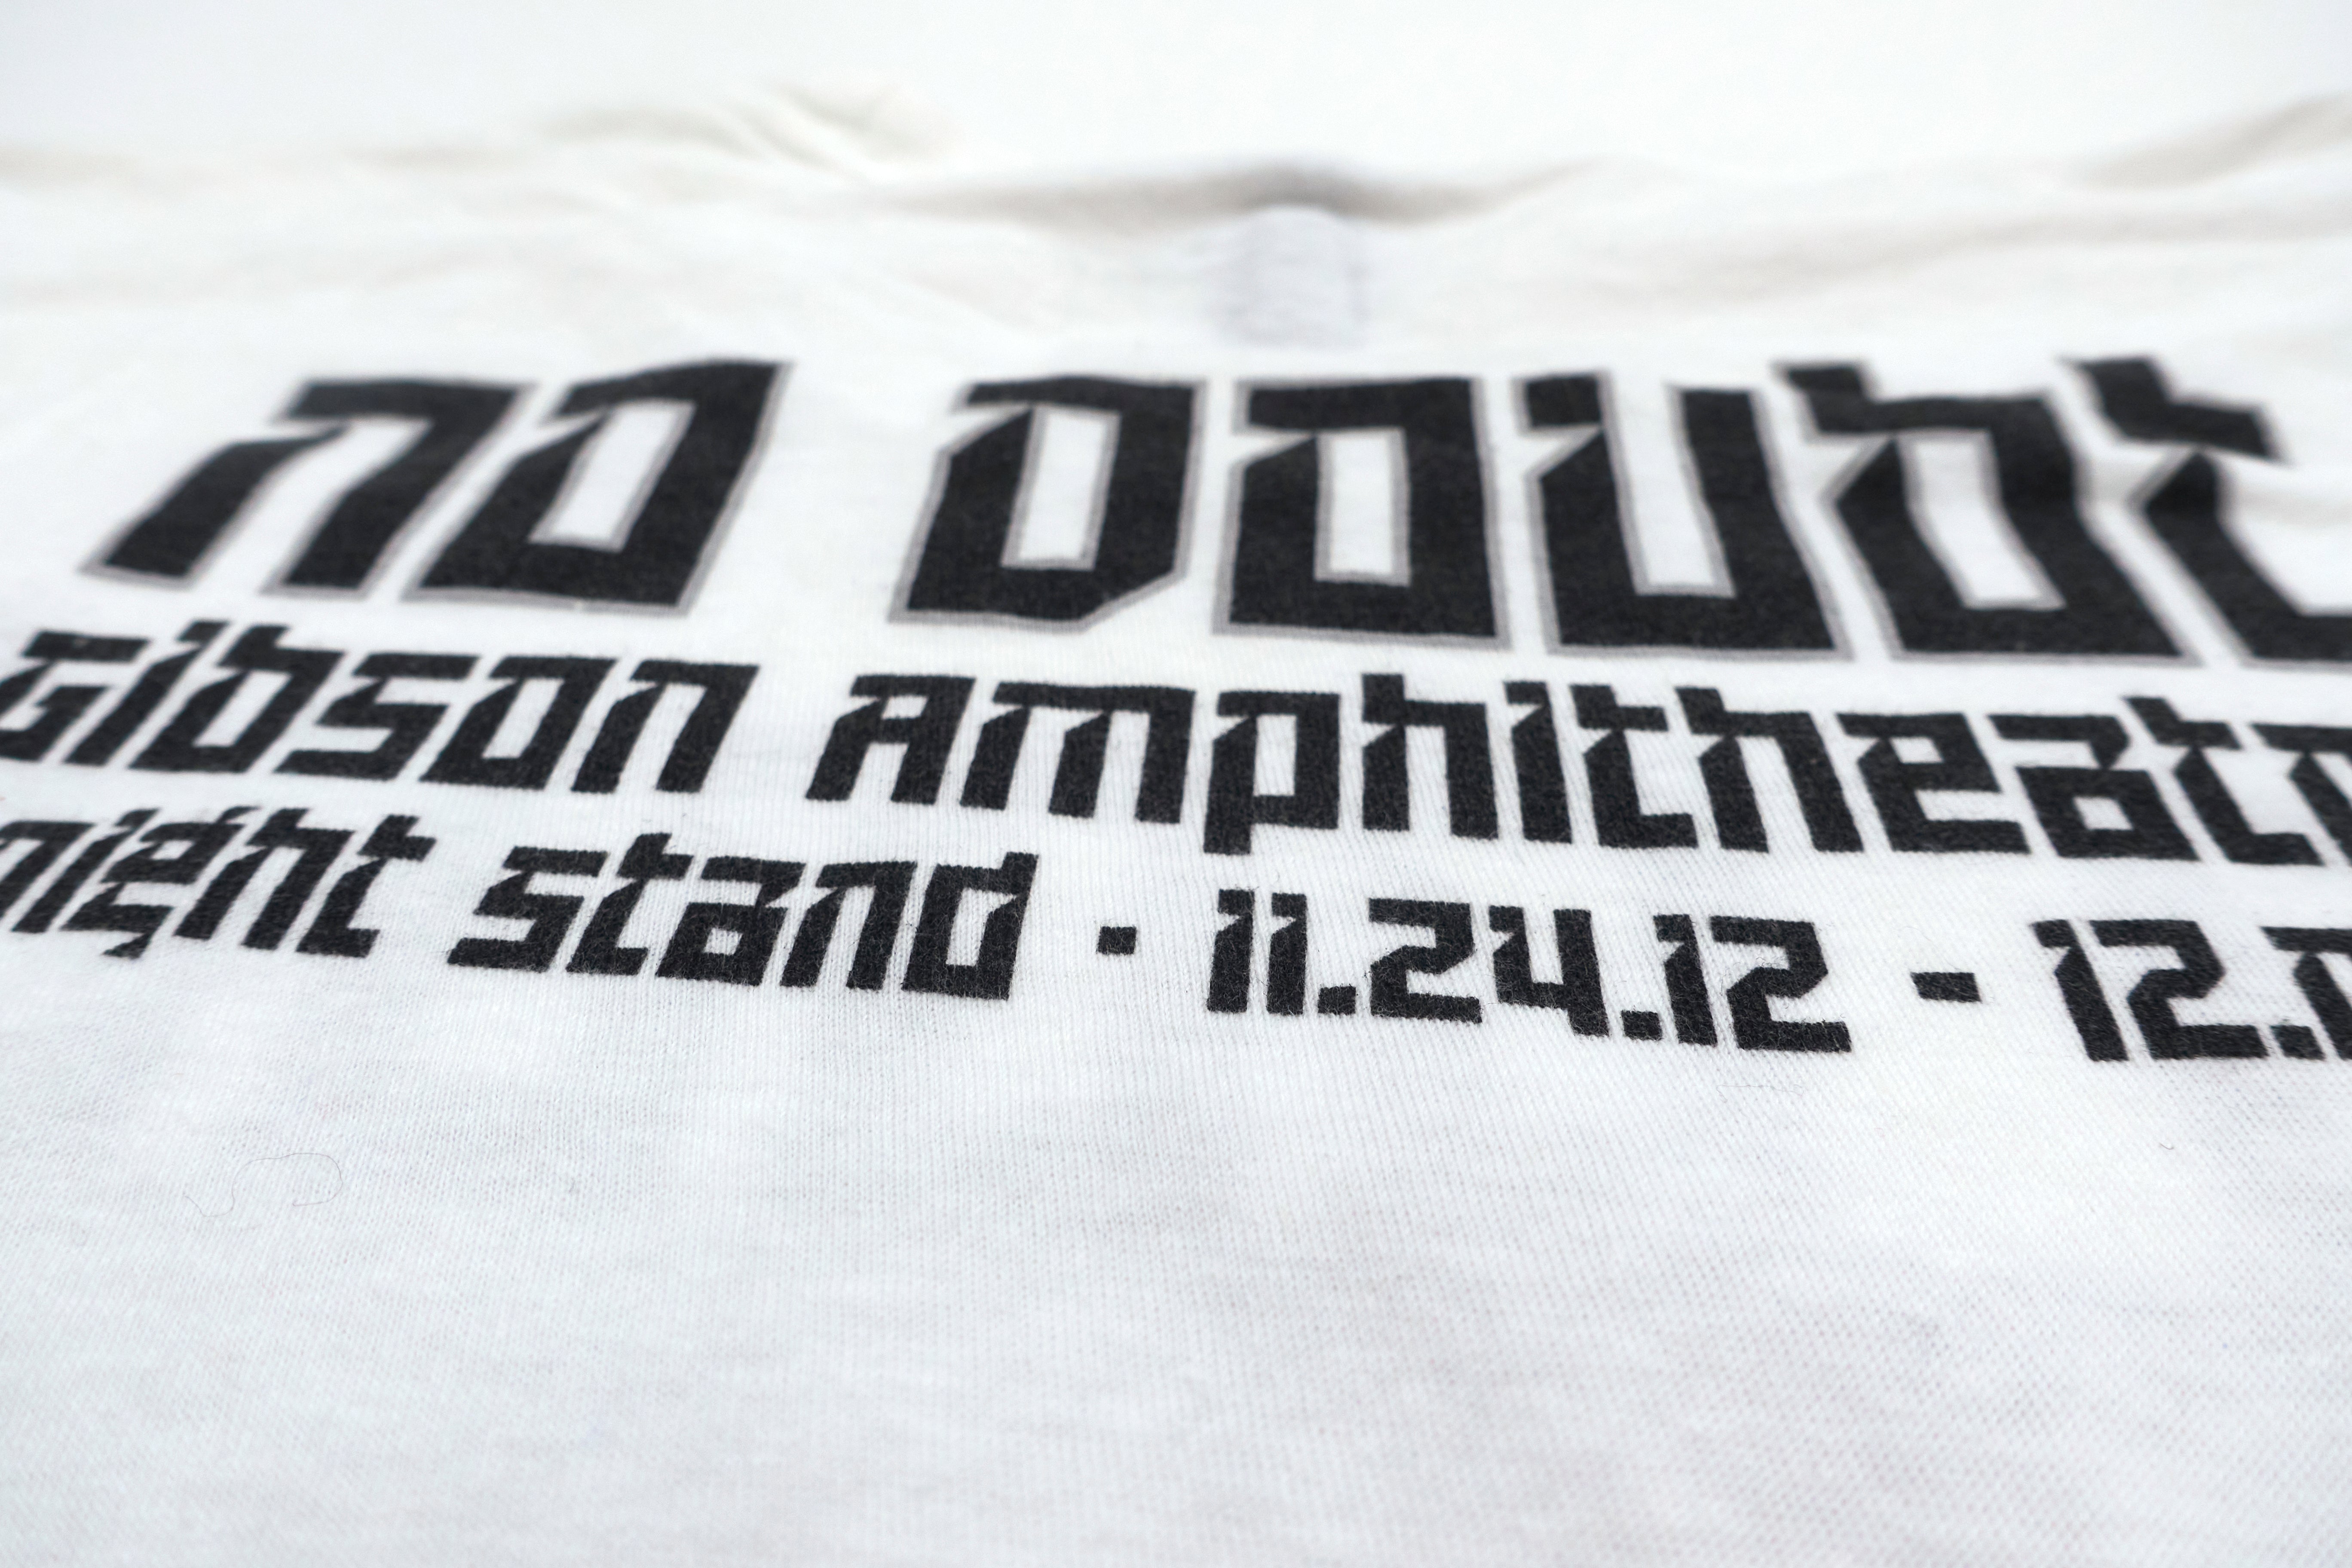 No Doubt - Push And Shove 7 Night Stand 2012 Tour Shirt Size Medium